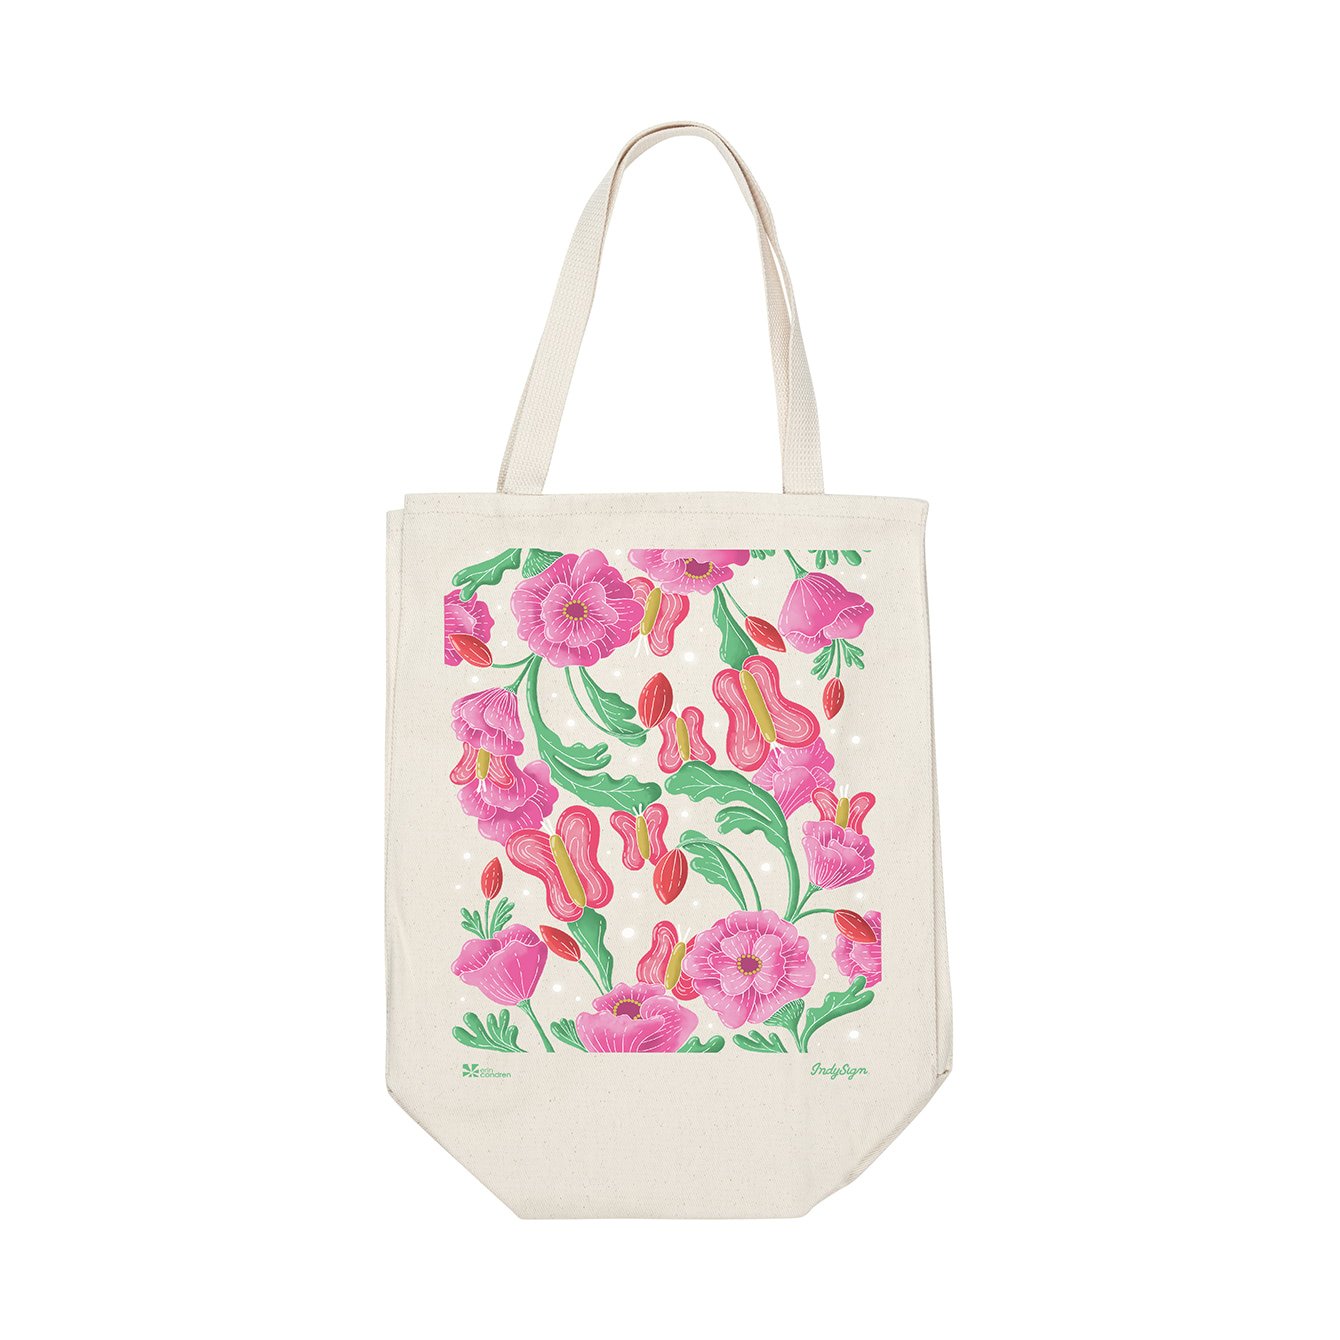 Mariposas Dream Canvas Tote Bag | Erin Condren